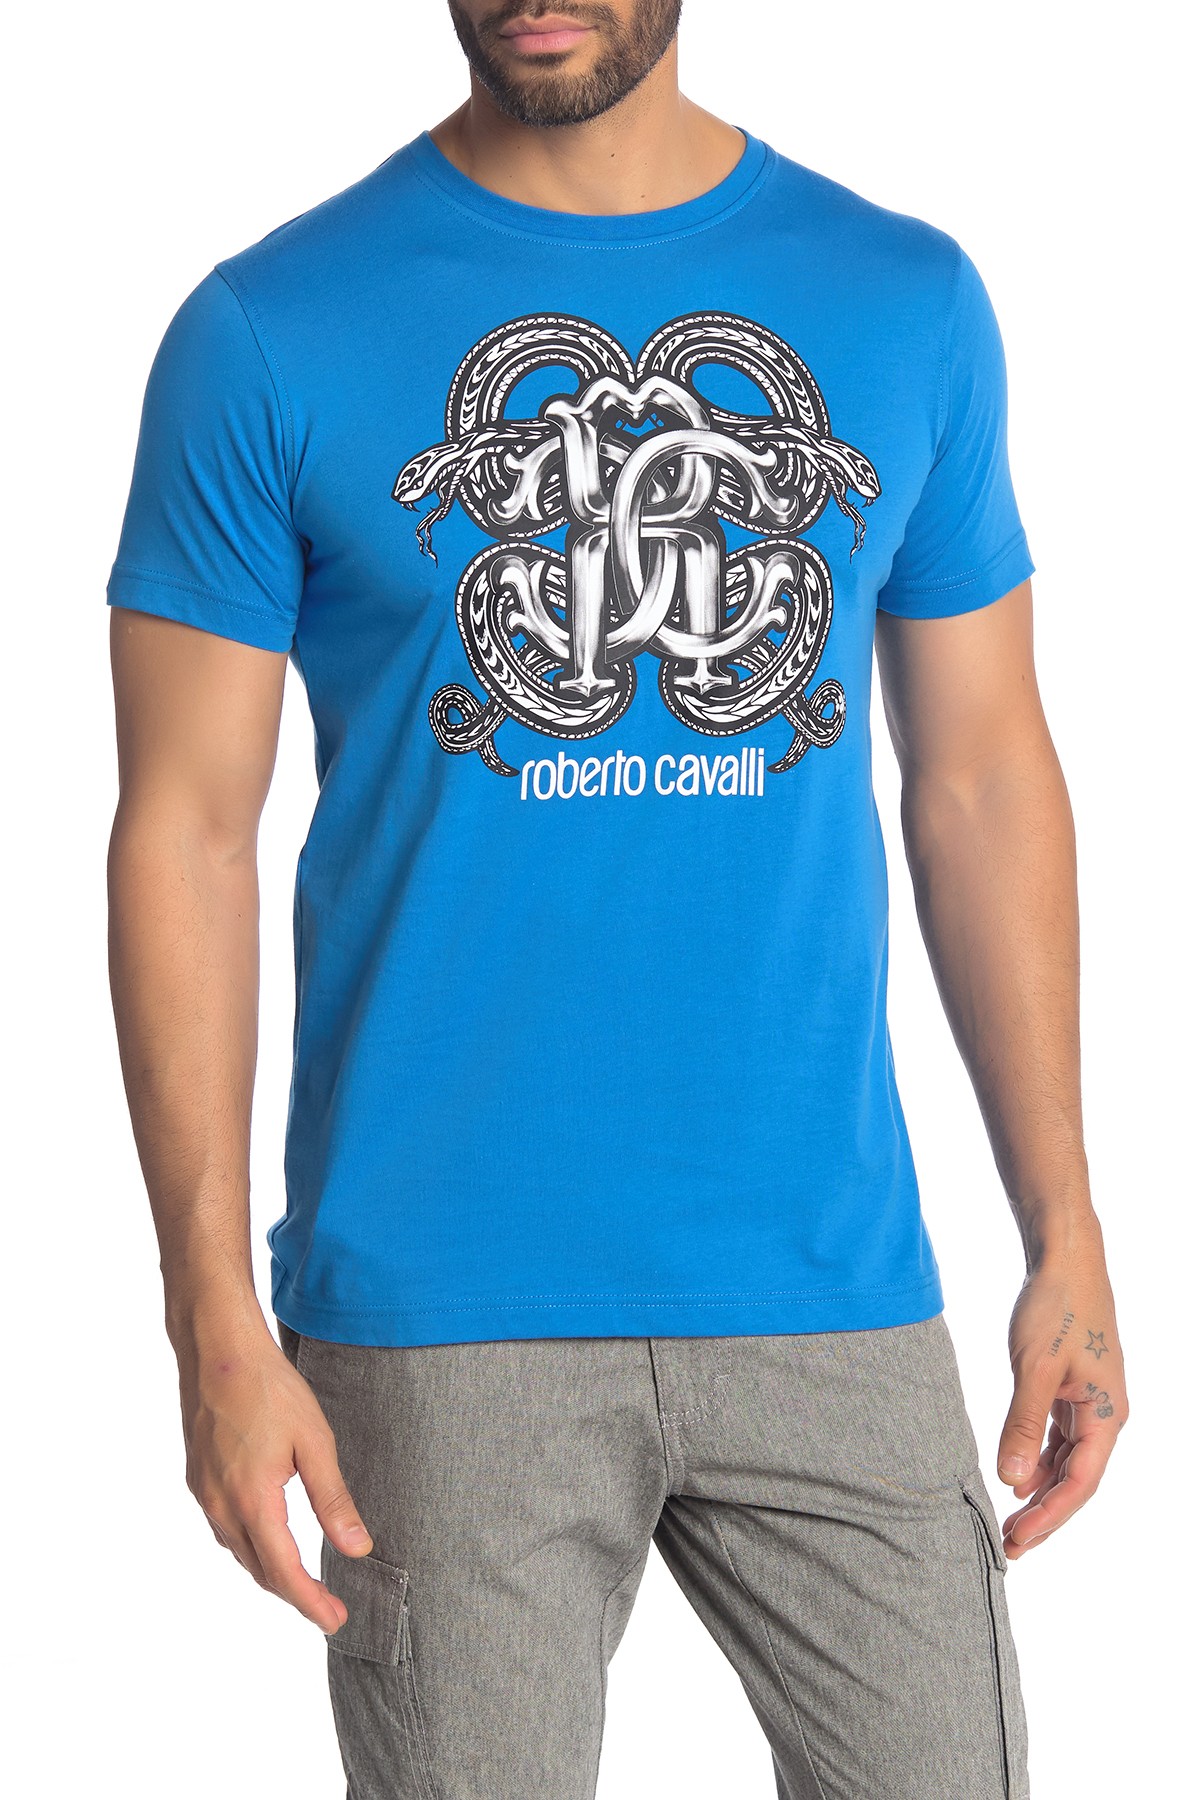 Roberto Cavalli Snake Front Graphic Short Sleeve T-Shirt BLUE ...